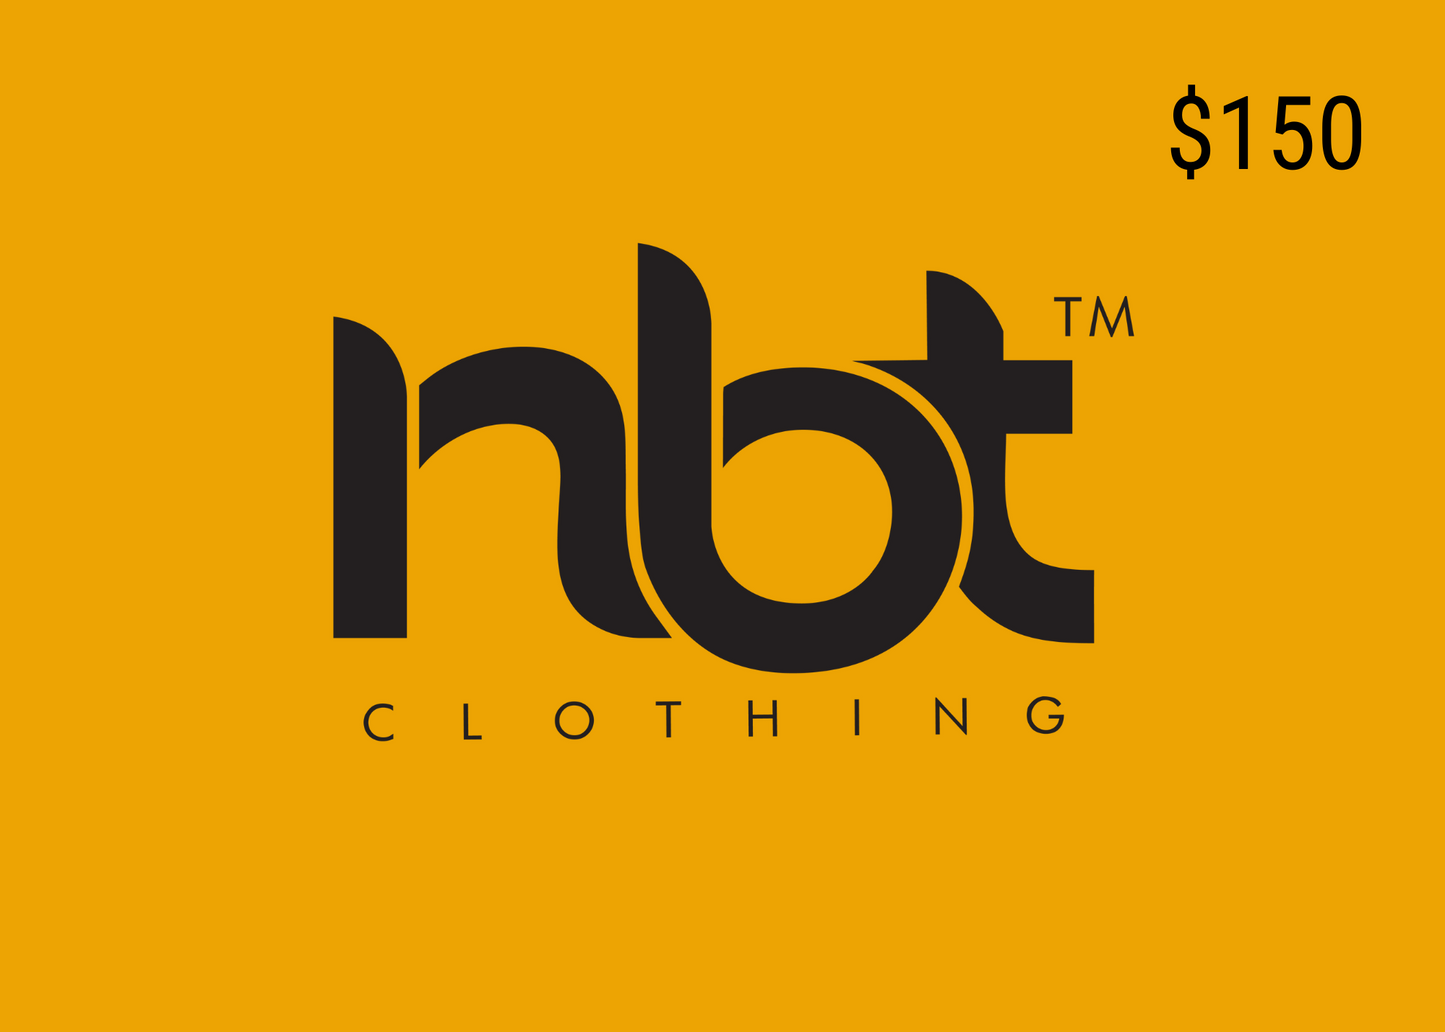 NBT Clothing E-Gift Card